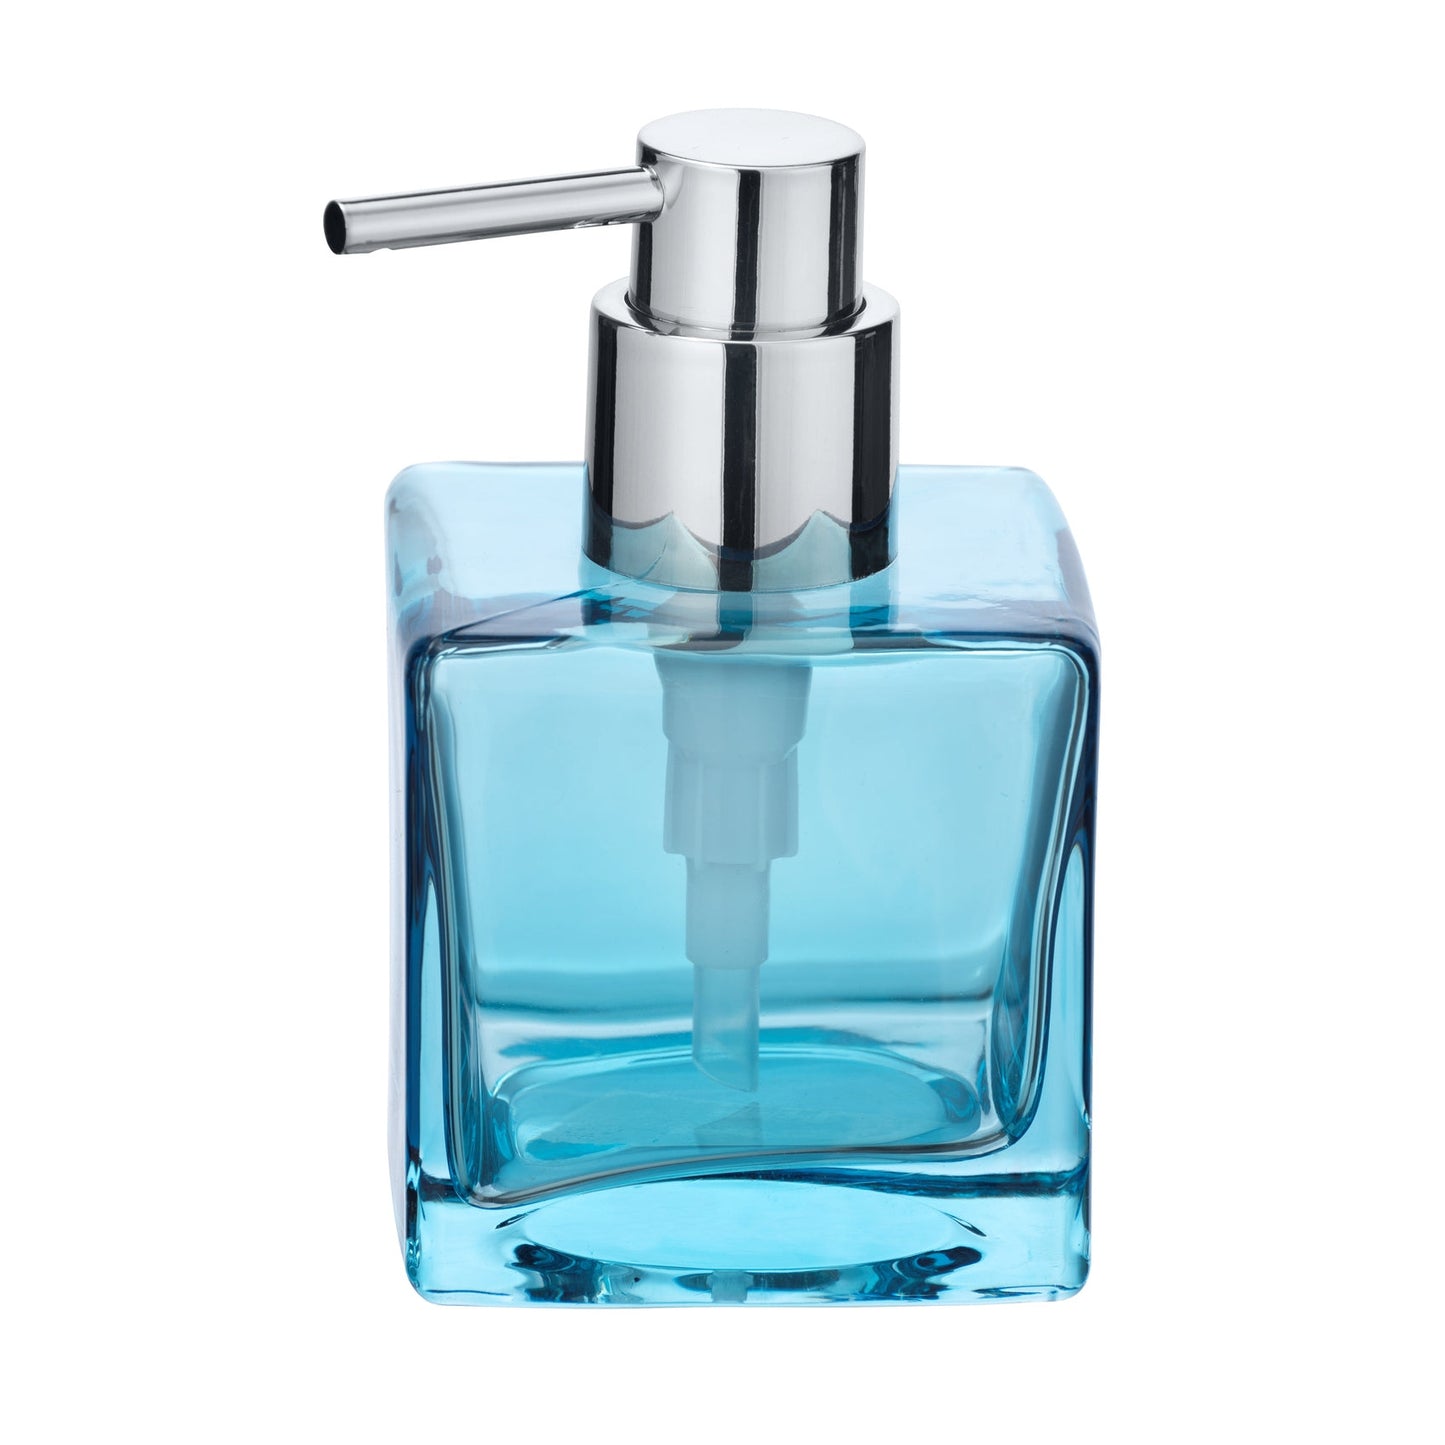 SOAP DISPENSER  - LAVIT RANGE - GLASS - TRANSPARENT BLUE